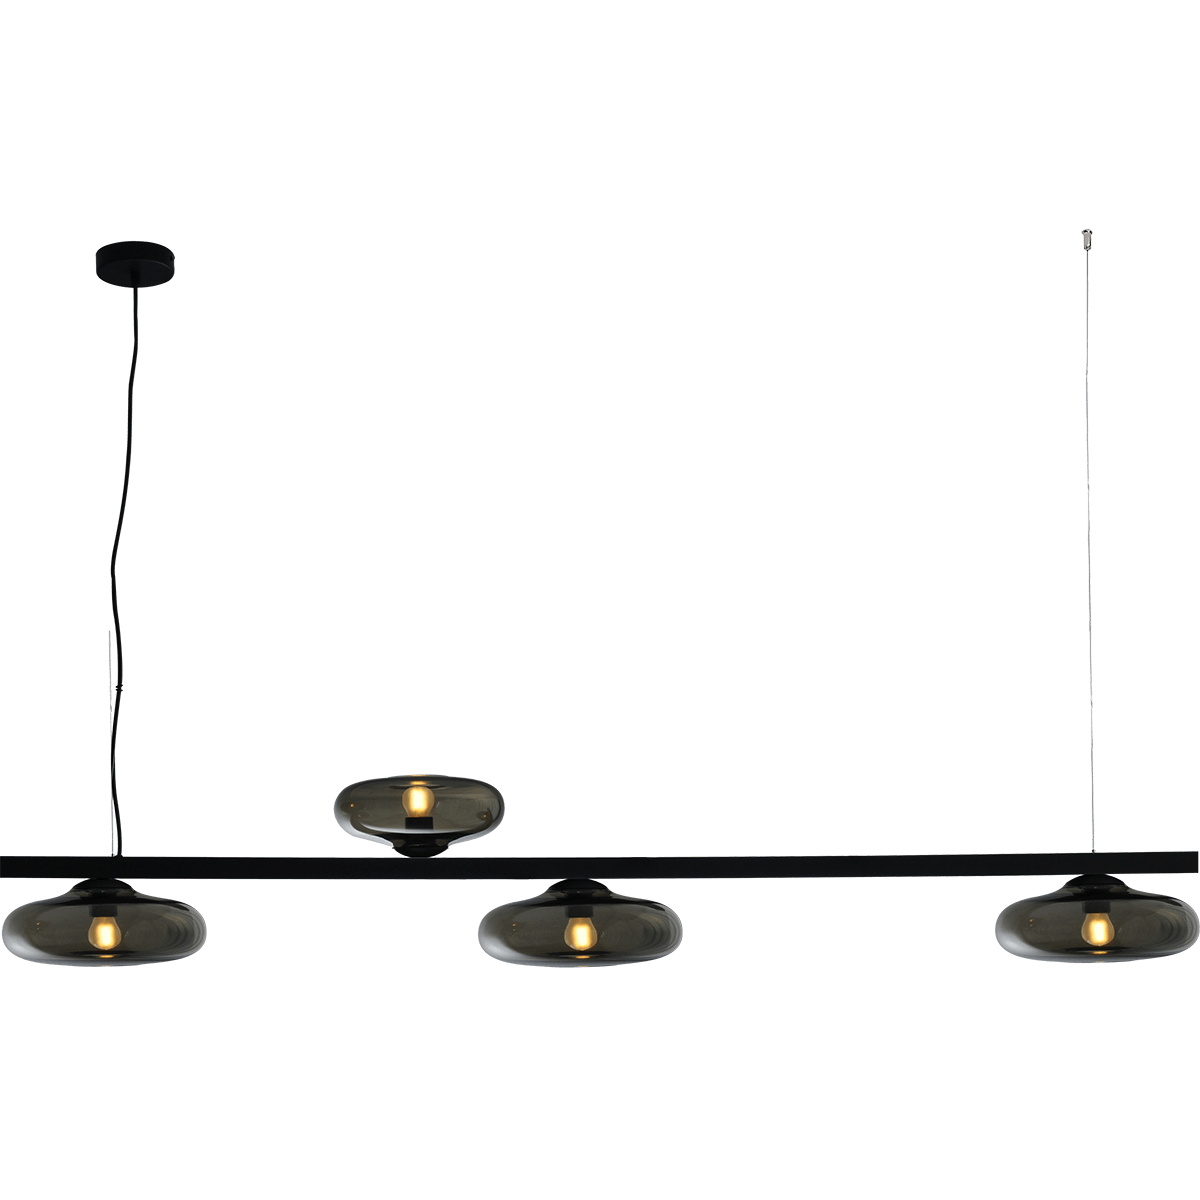 Hanglamp Hoseki 4-lichts zwart 160cm - 3x down 1x up - 3x glas smoke Ø28cm + 1x Ø23cm - stalen draad - MASTERLIGHT